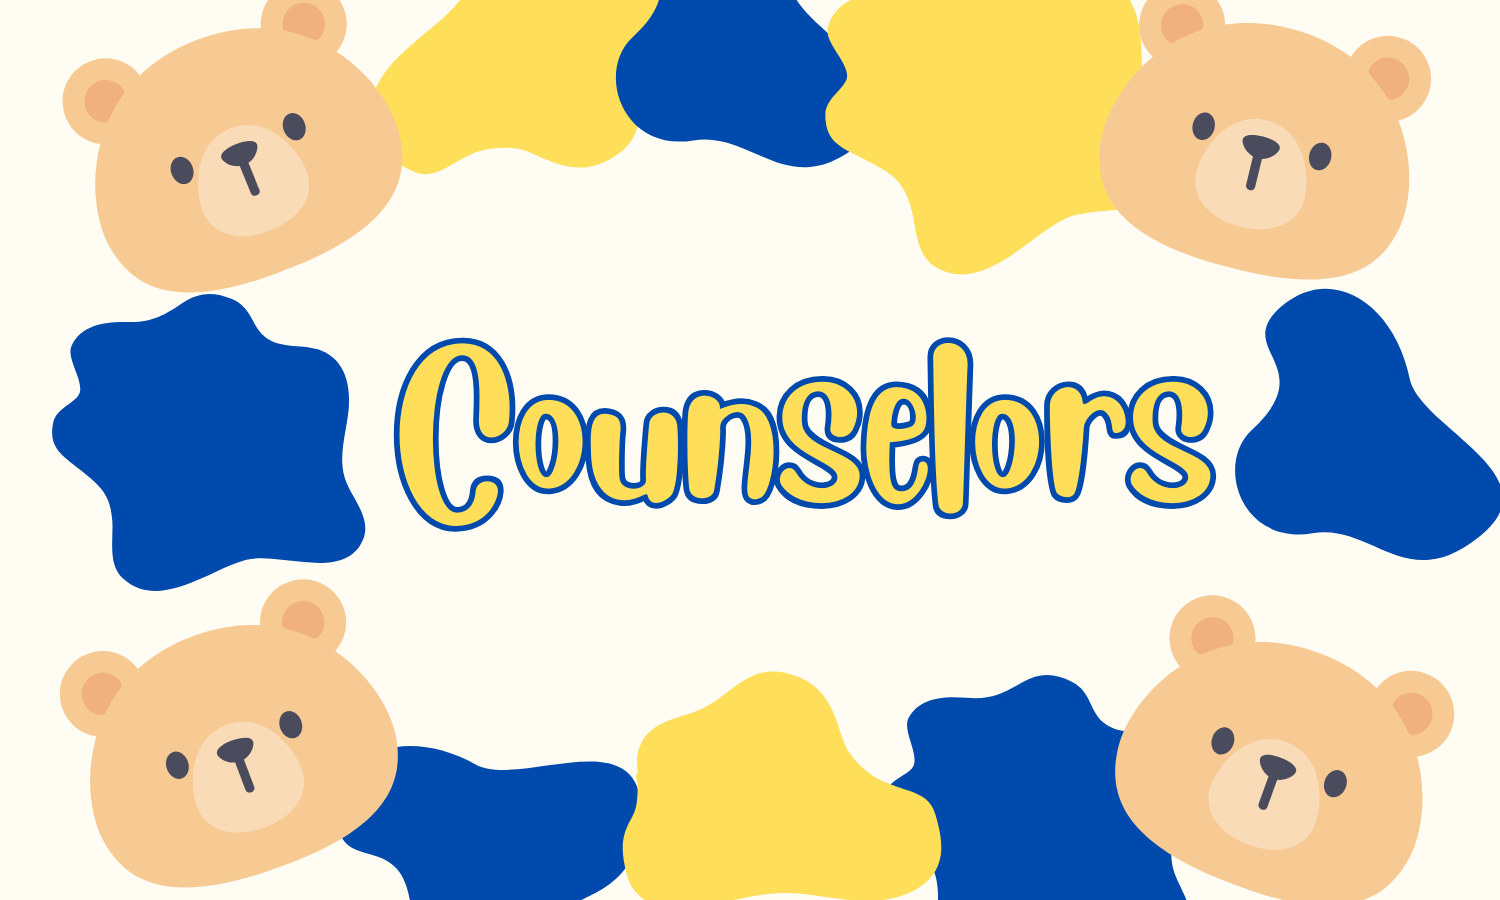 Counselors Image Title